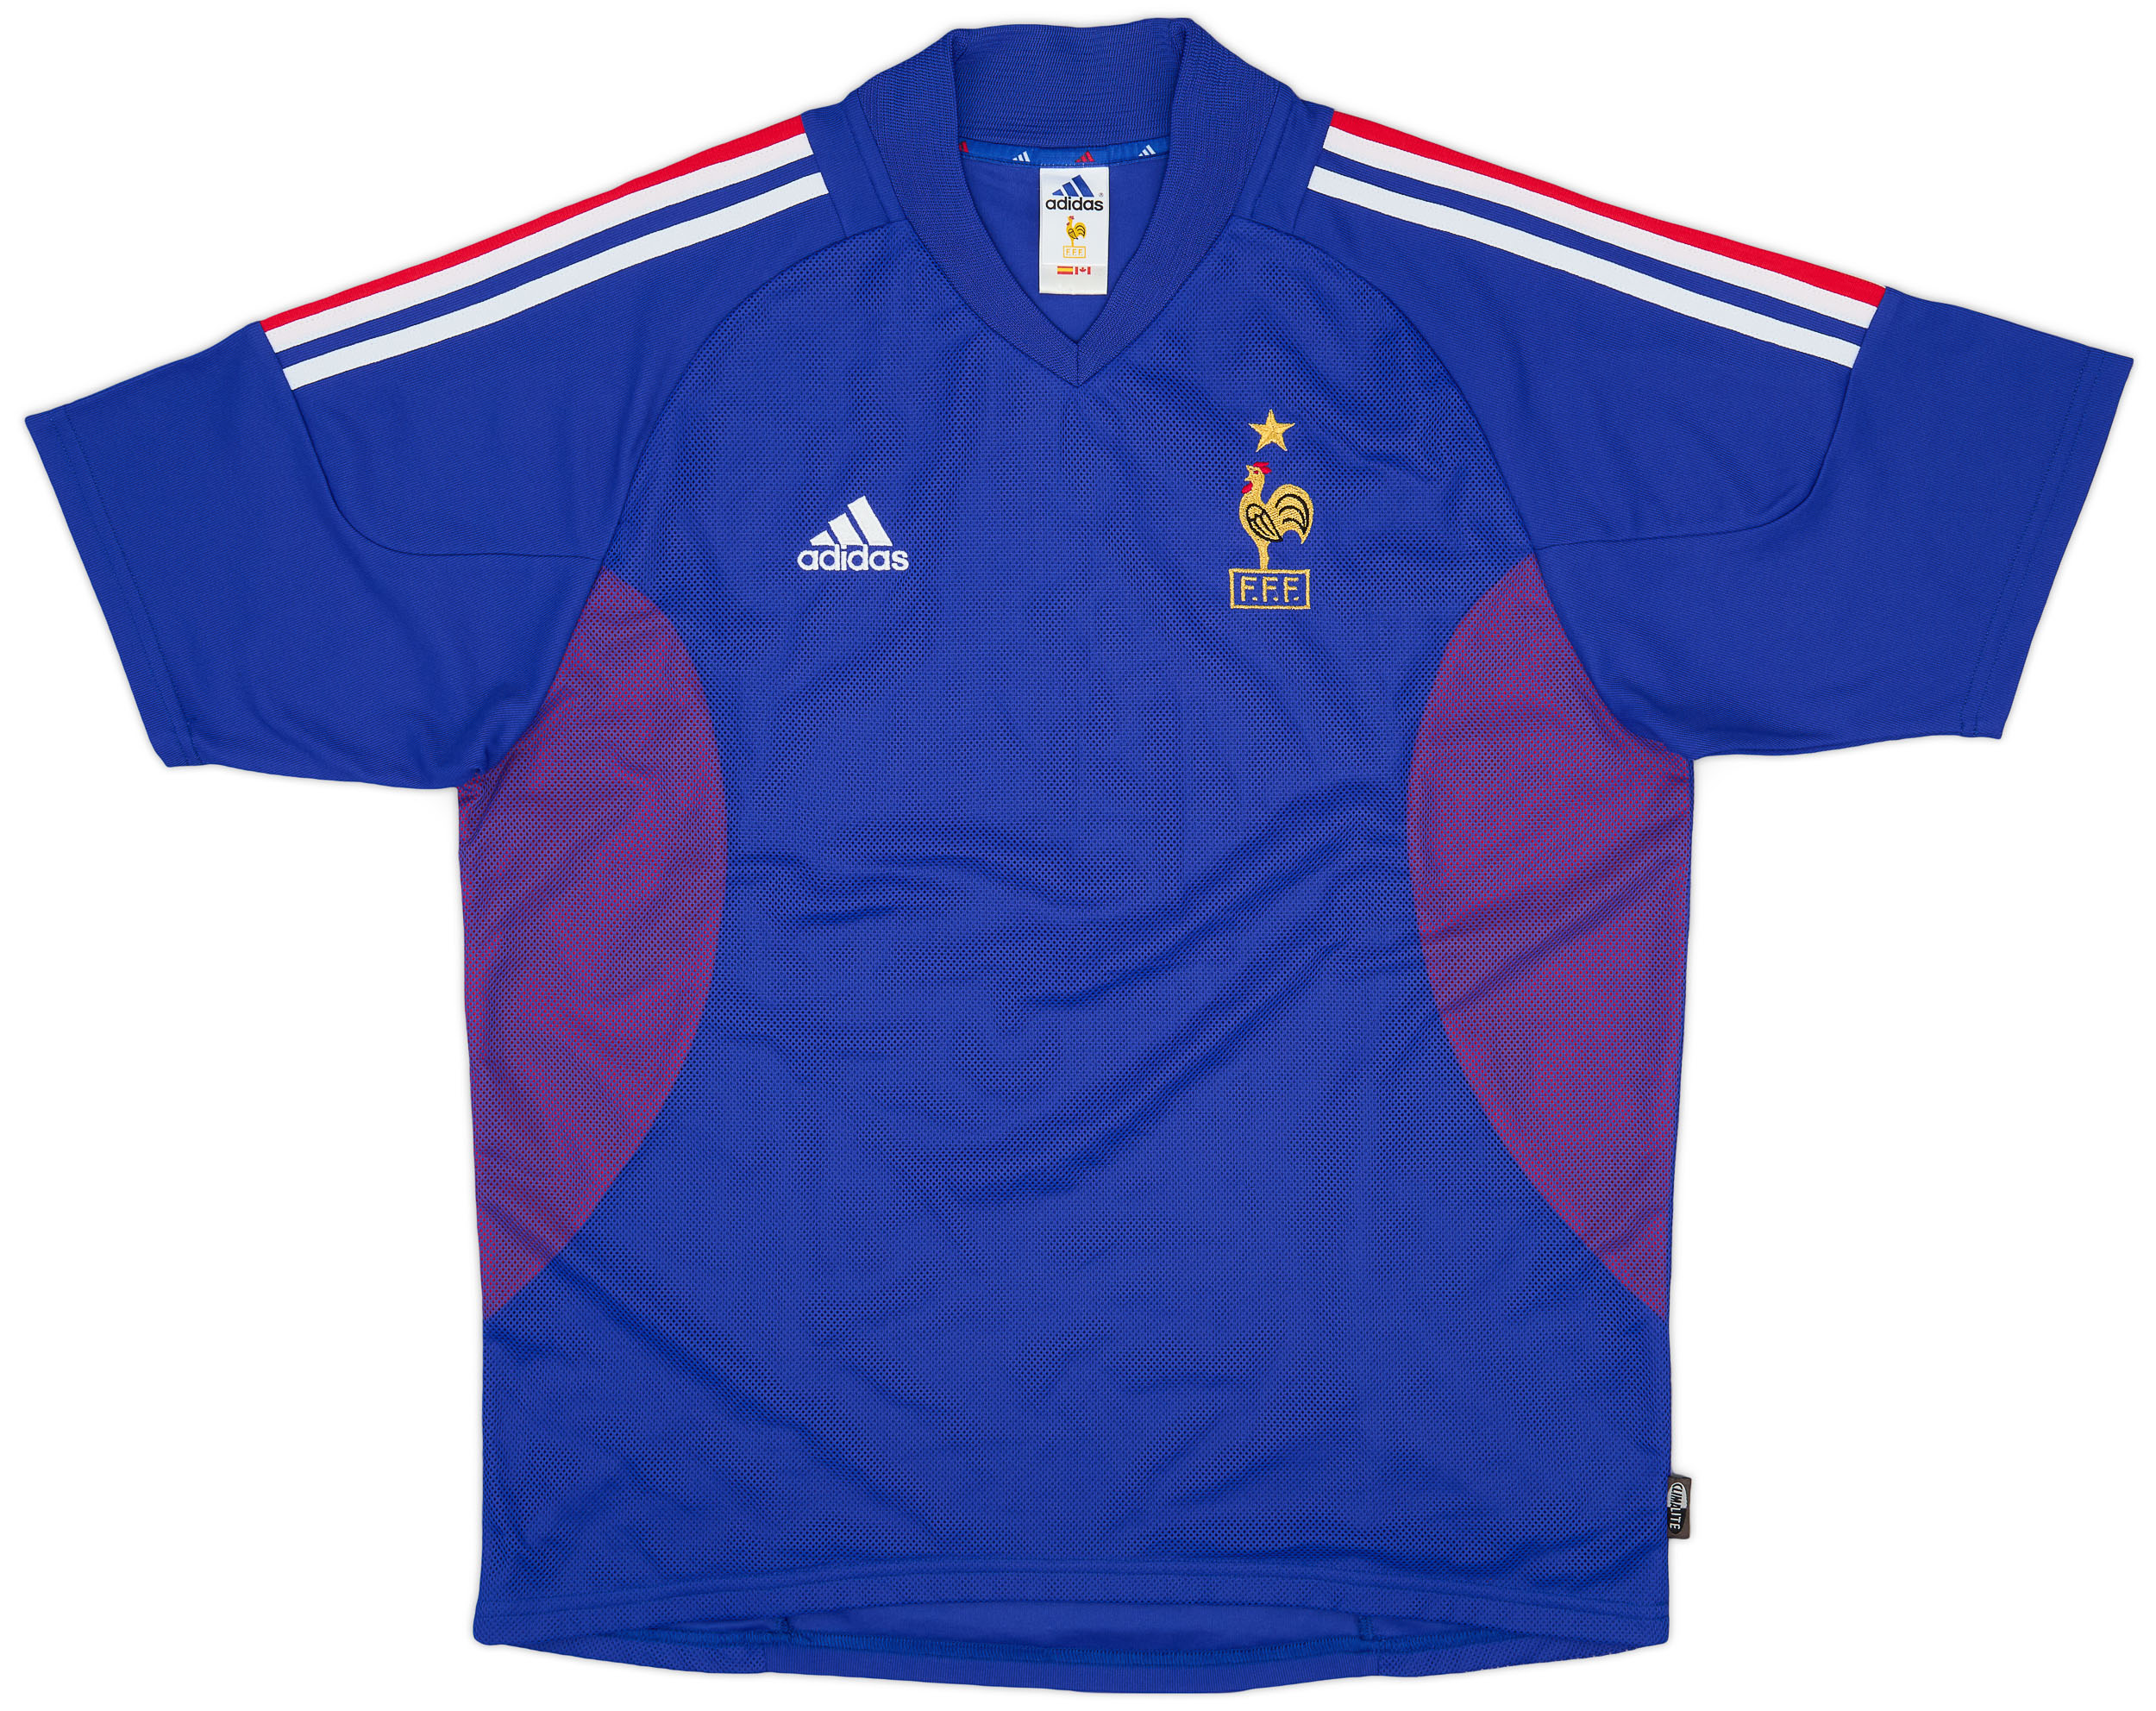 2002-04 France 'Signed' Home Shirt - 9/10 - ()